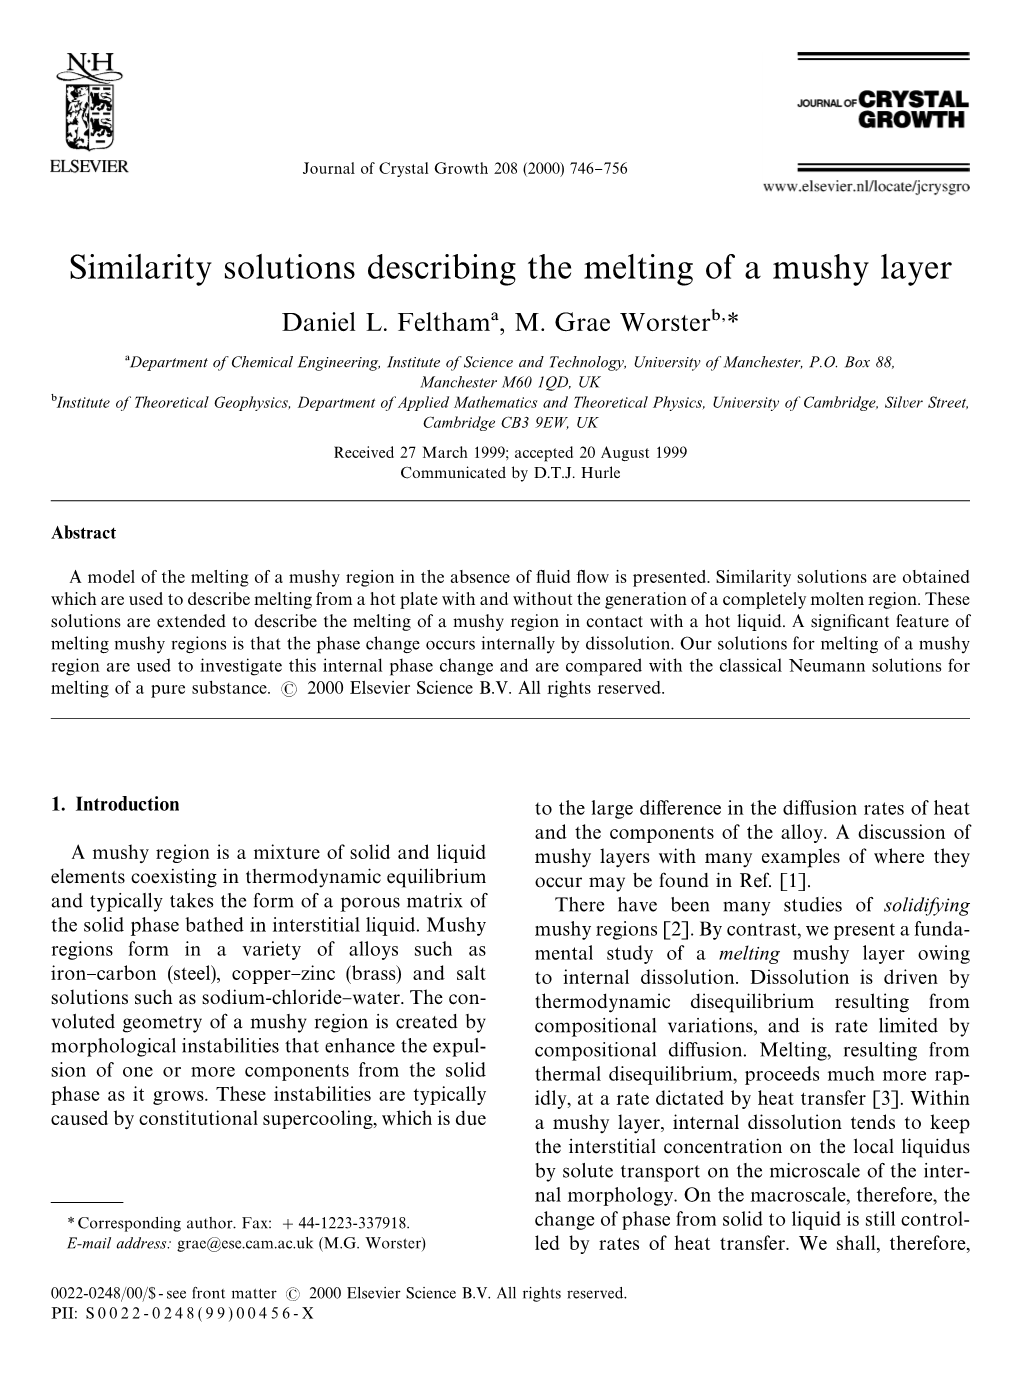 Similarity Solutions Describing the Melting of a Mushy Layer Daniel L